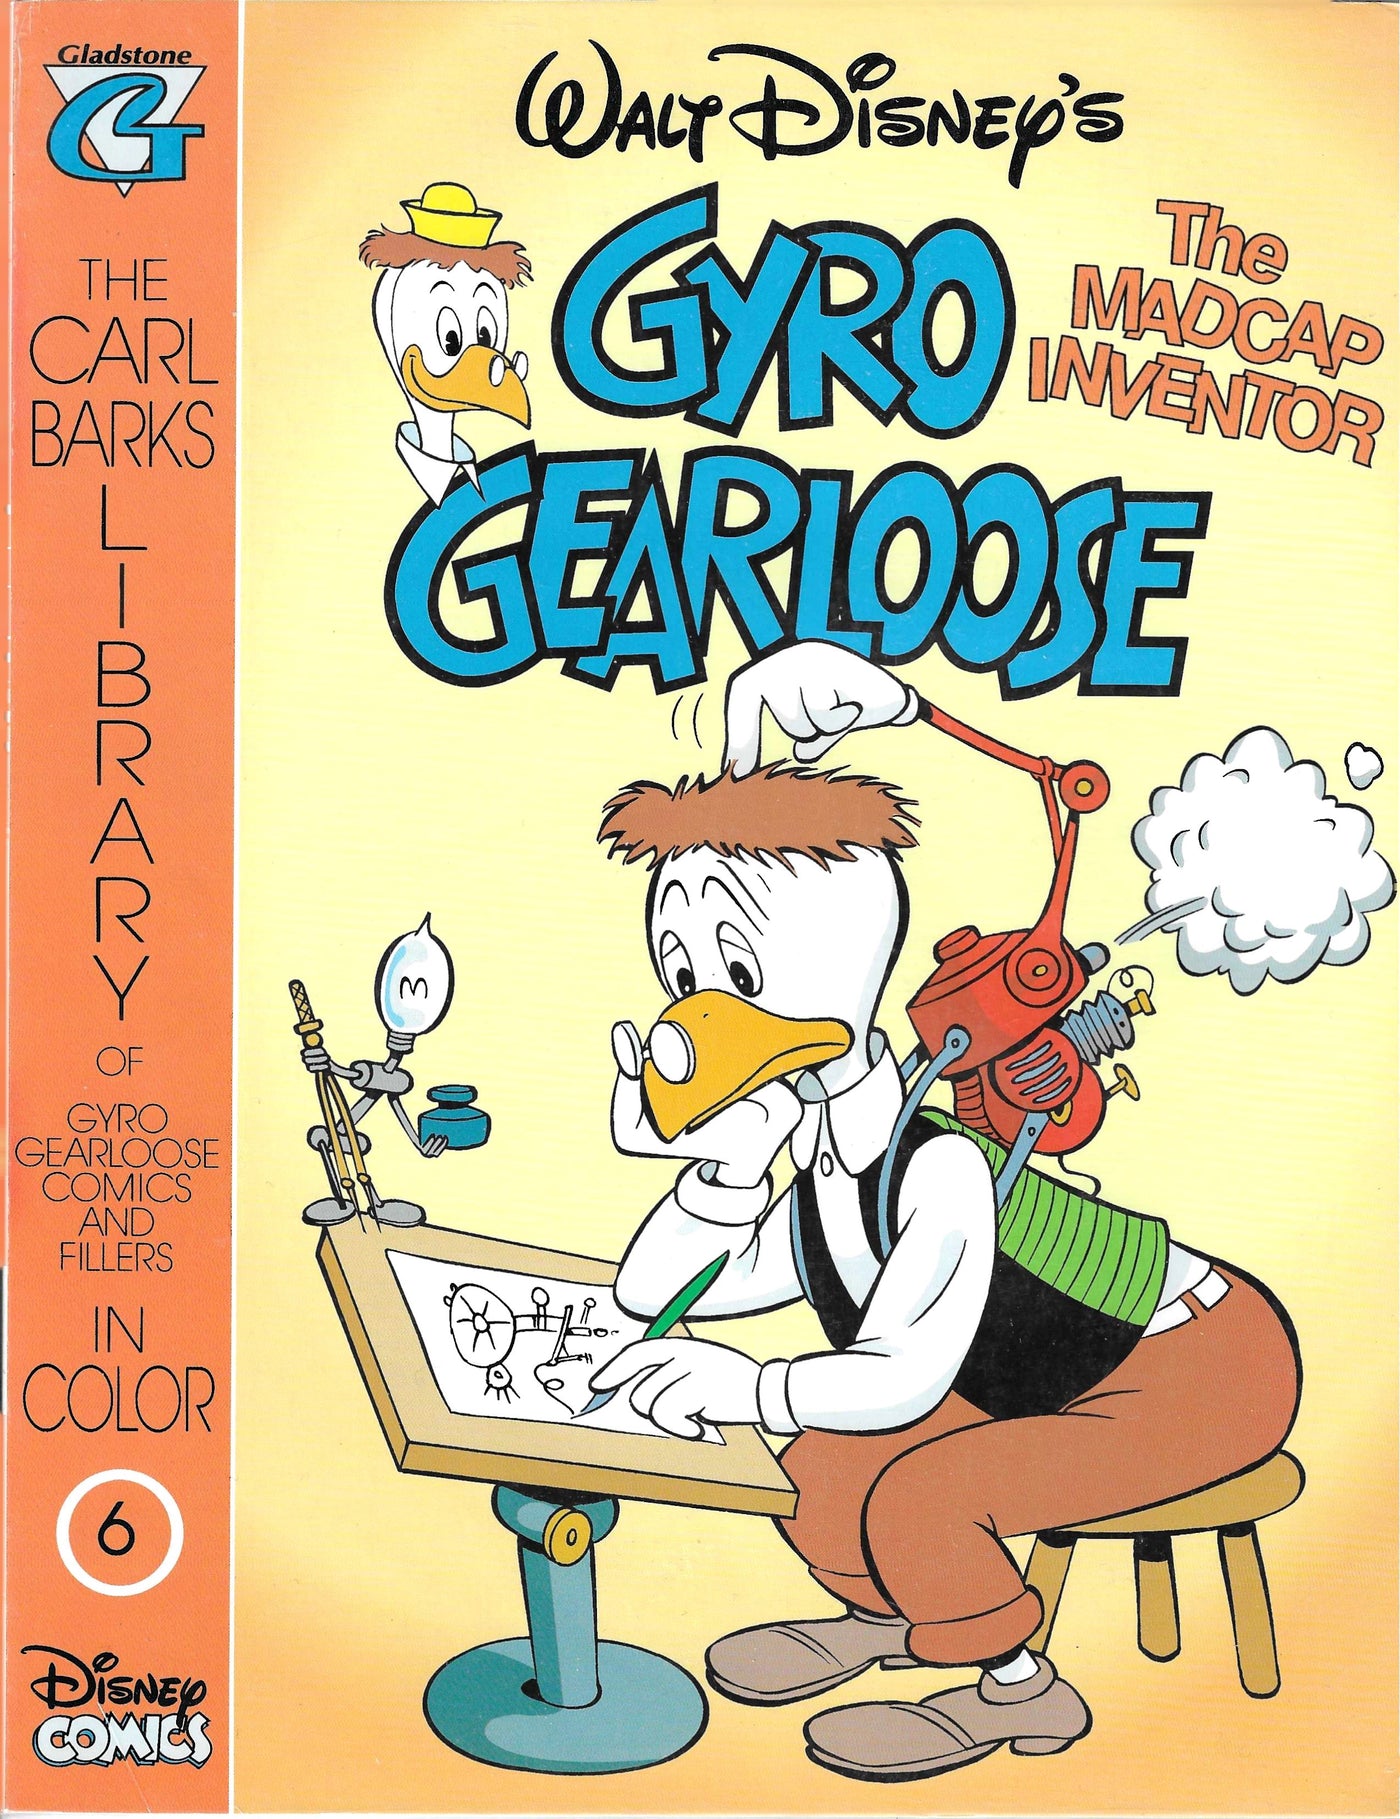 Walt Disneys Gyro Gearloose The Madcap Inventor, #6